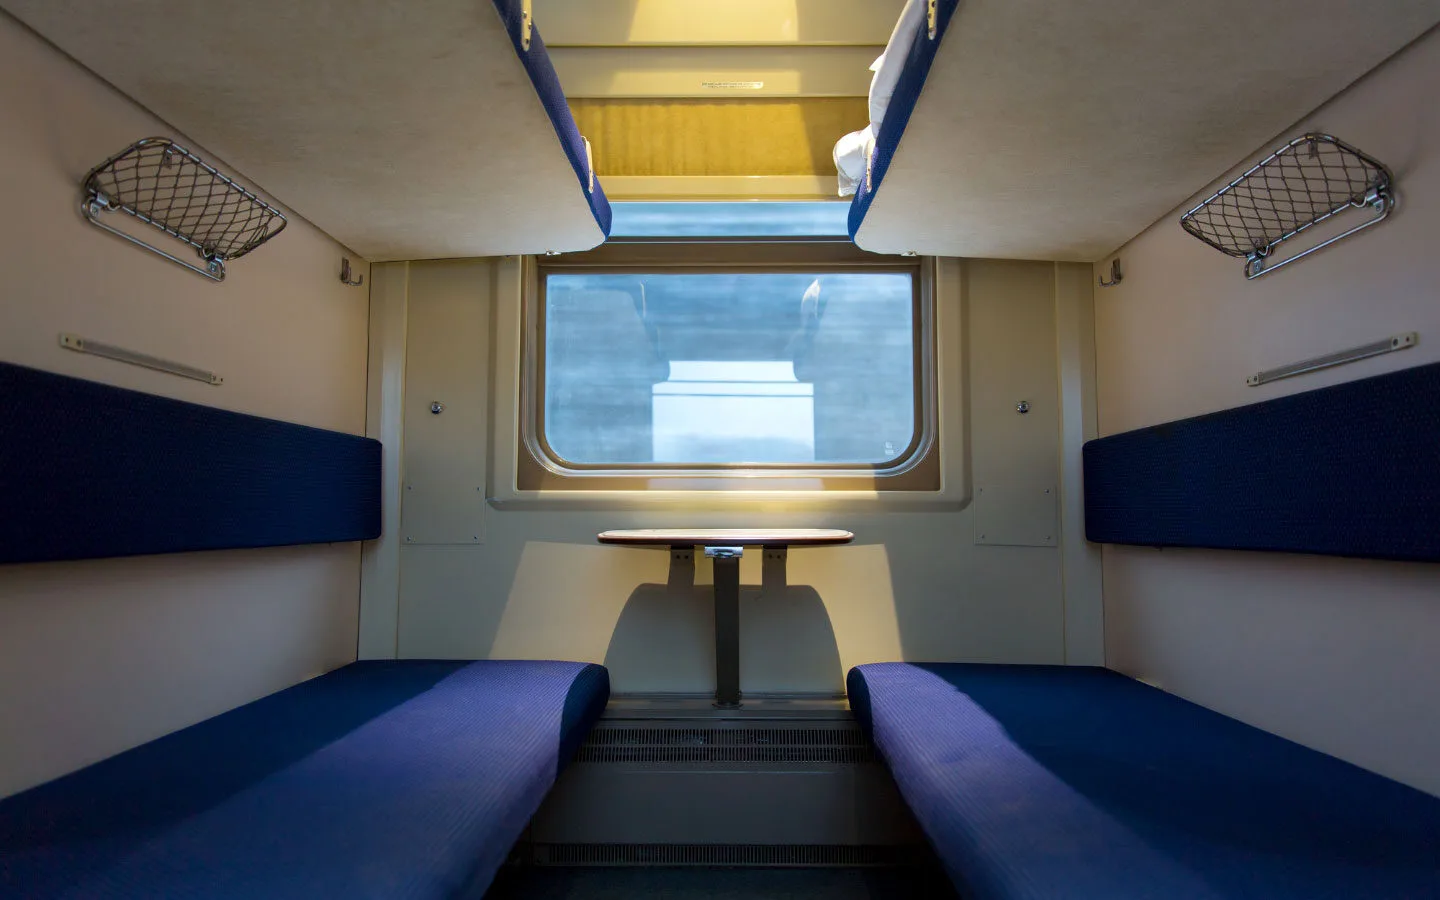 A four-bed couchette on a European sleeper train